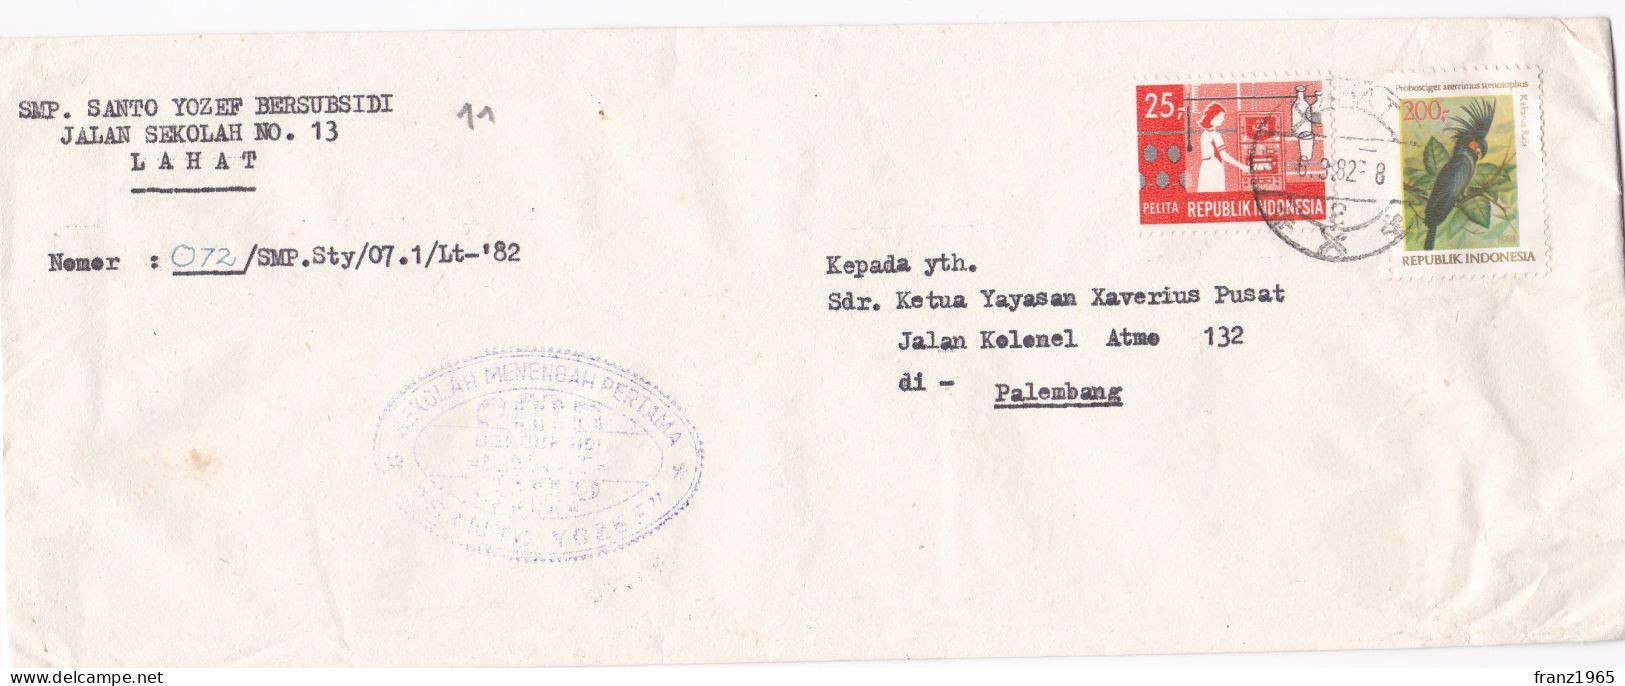 Postal History - 1982 - Indonesia